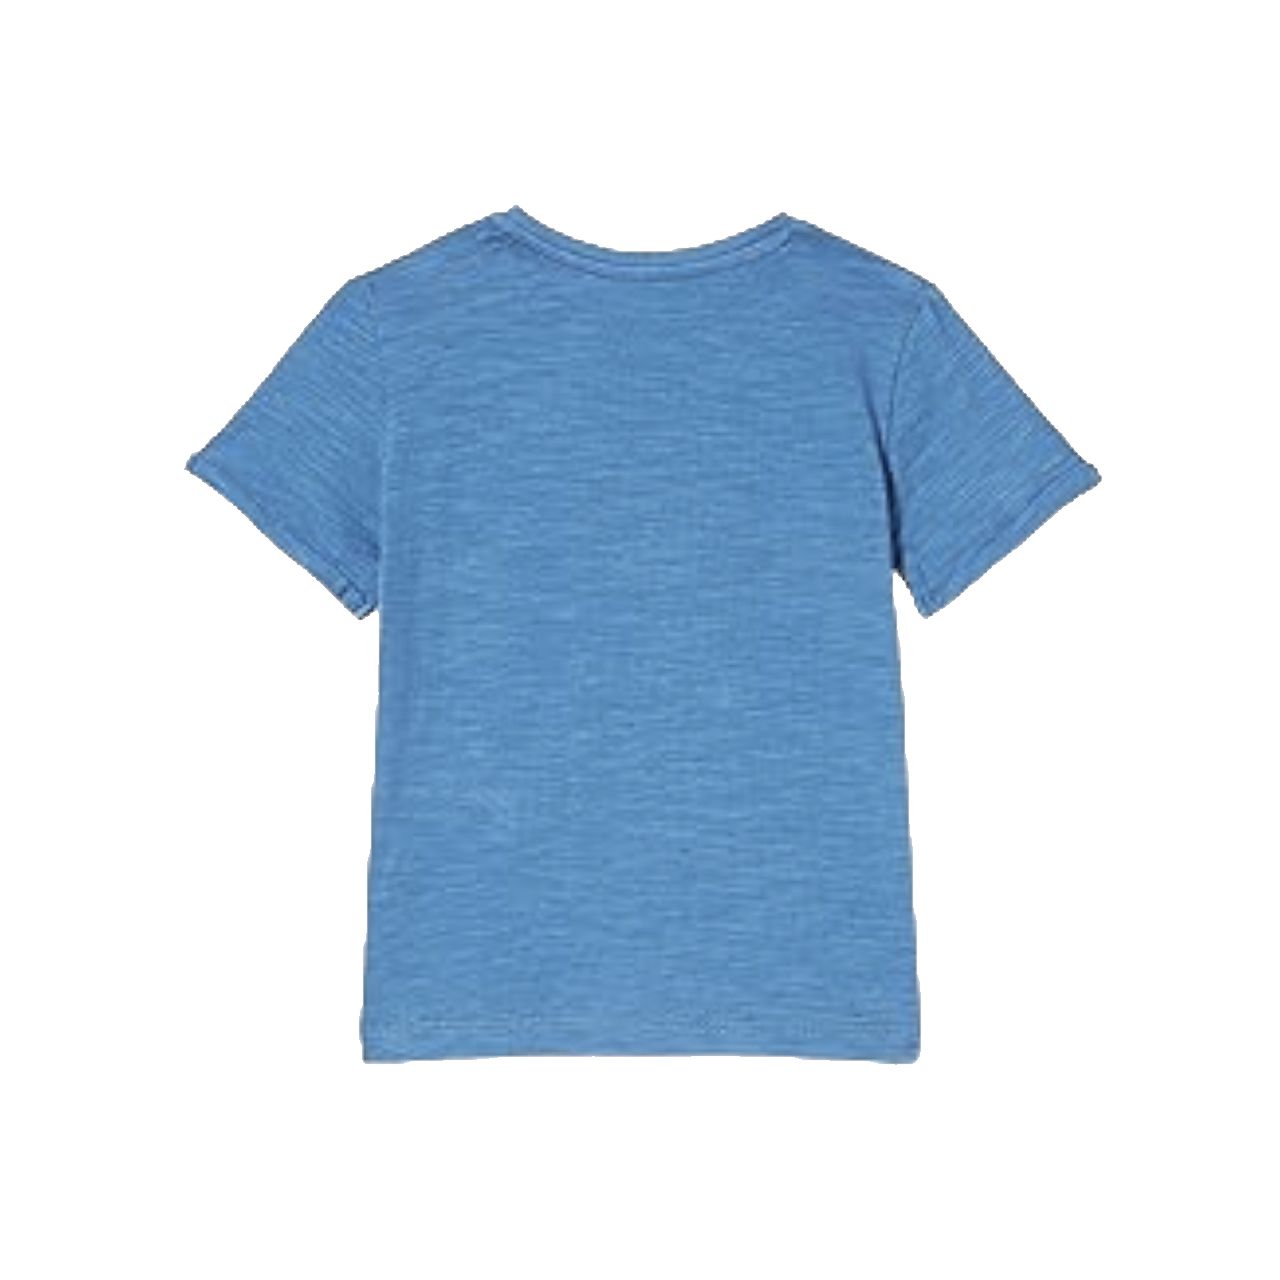 تی شرت آستین کوتاه نوزادی اس.اولیور کد 4911 -  - 2